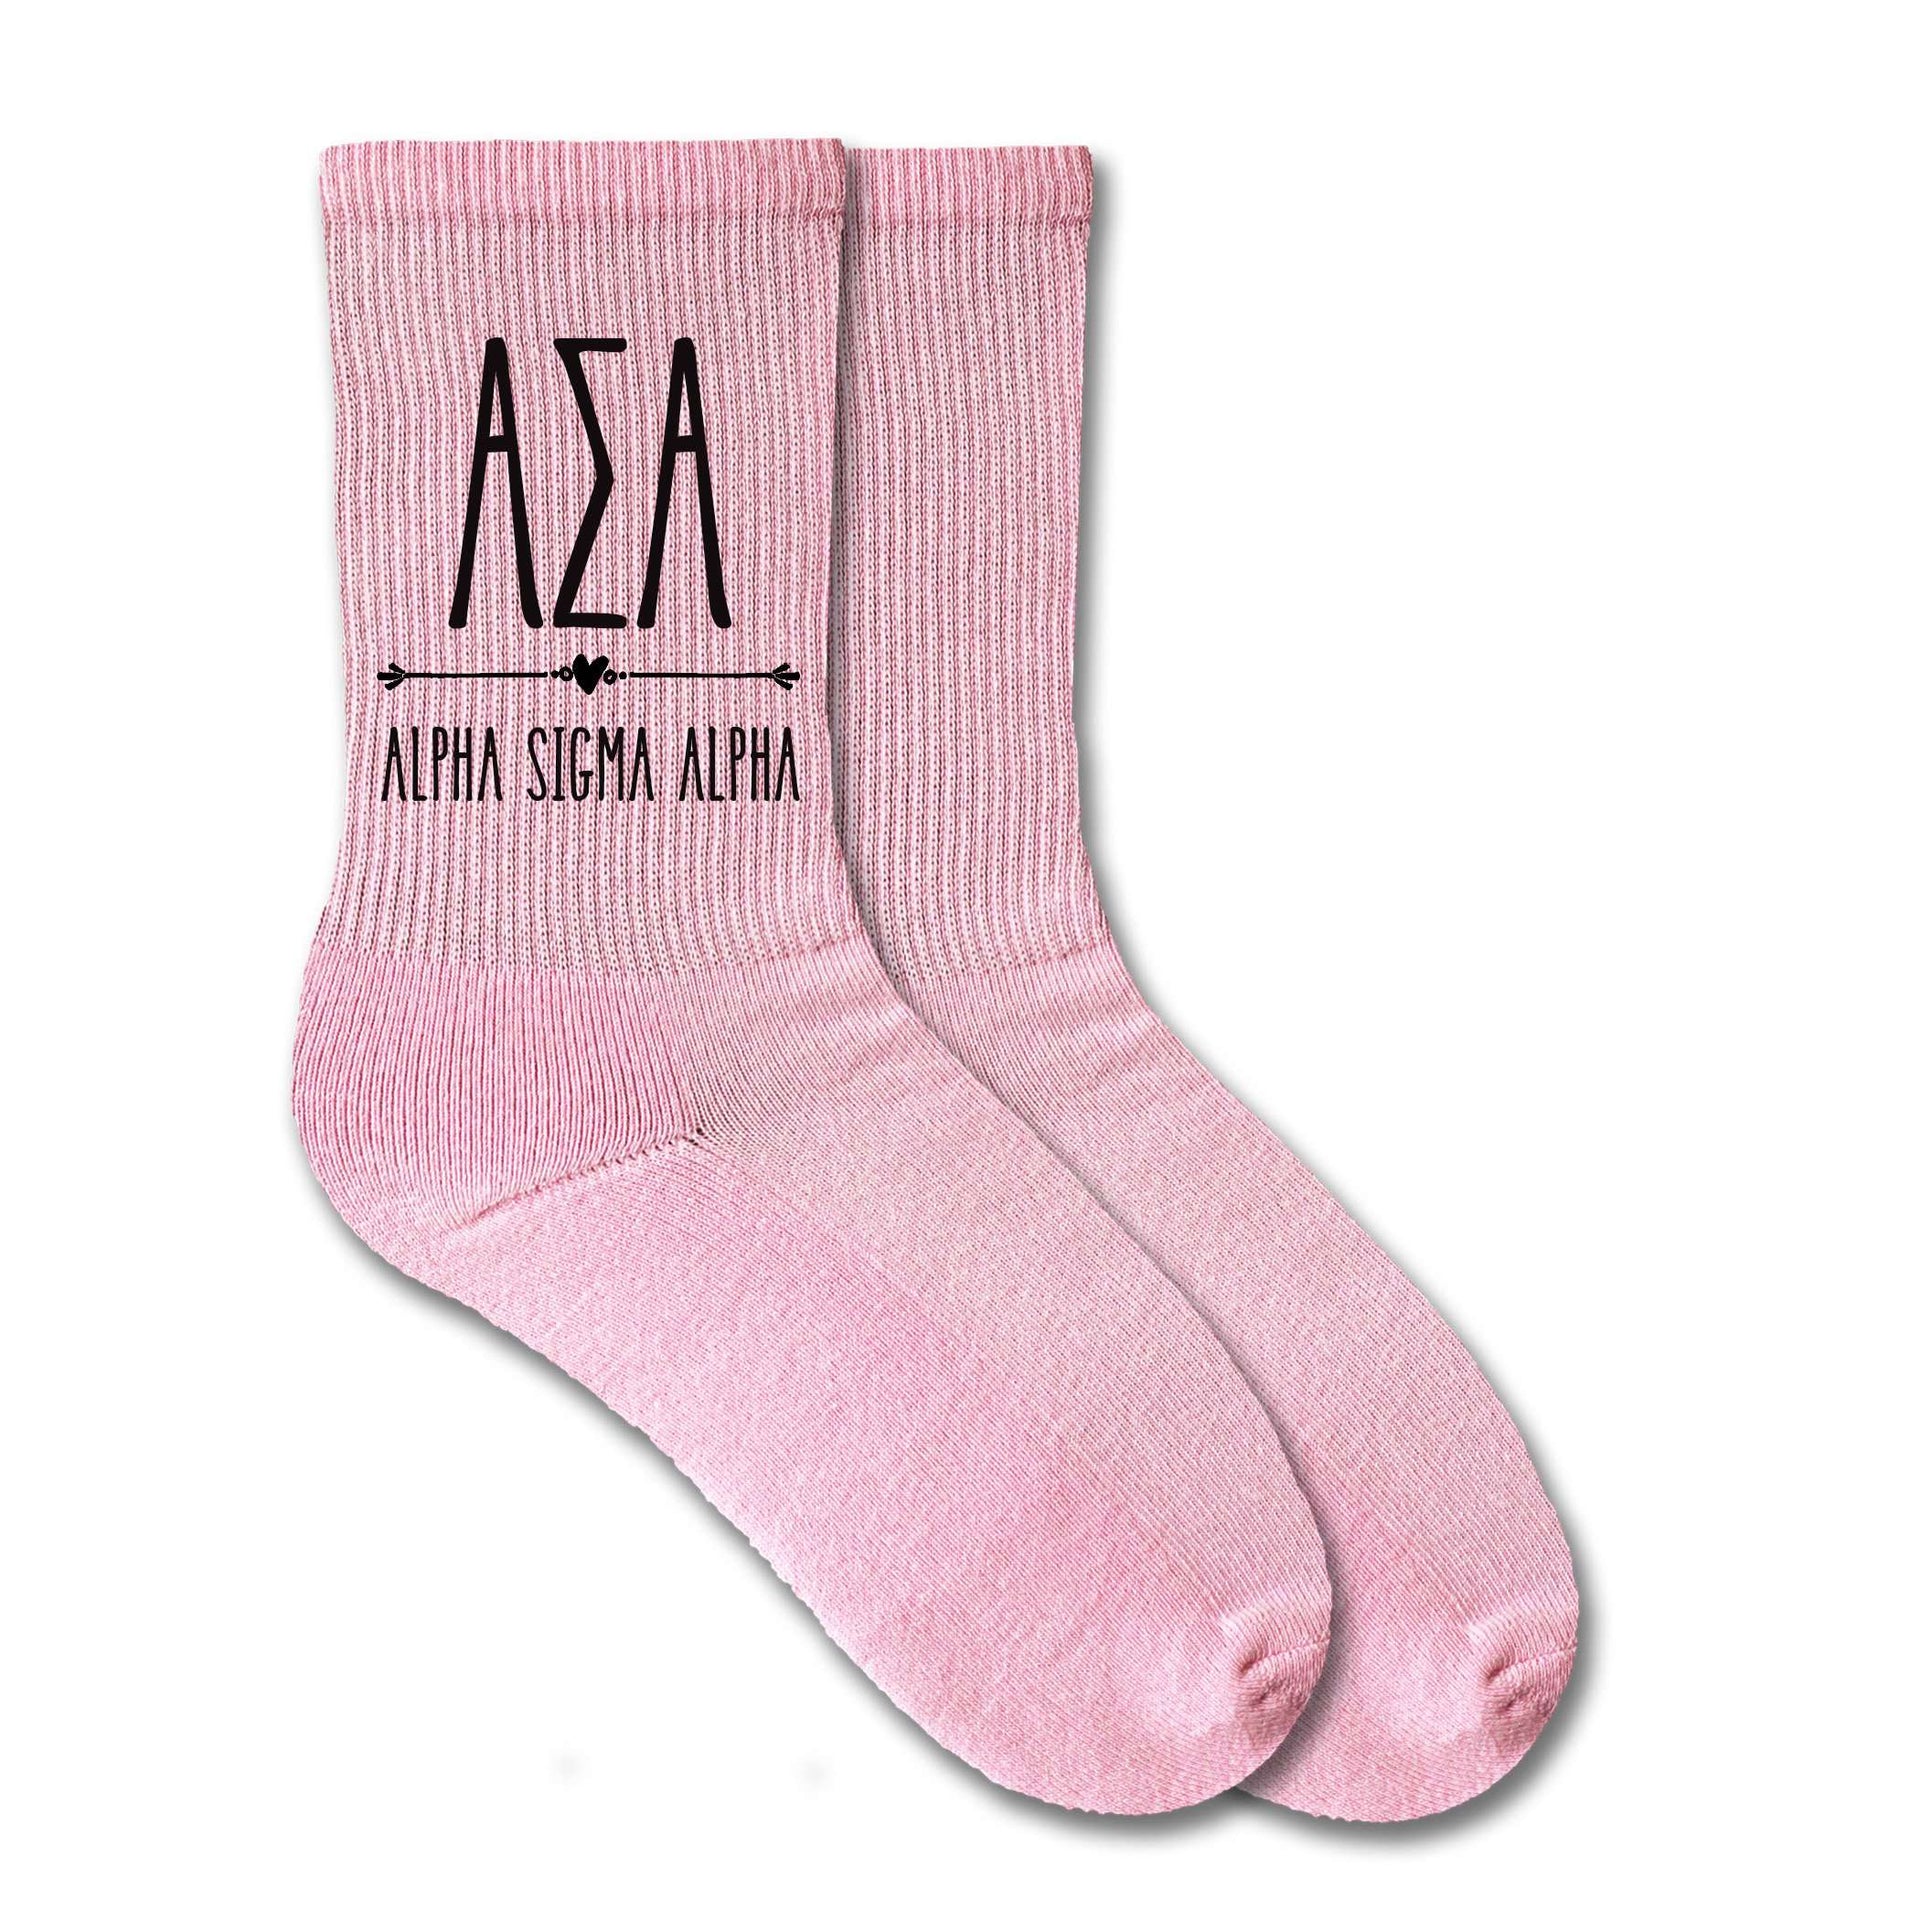 ASA sorority letters and name custom printed on pink crew socks